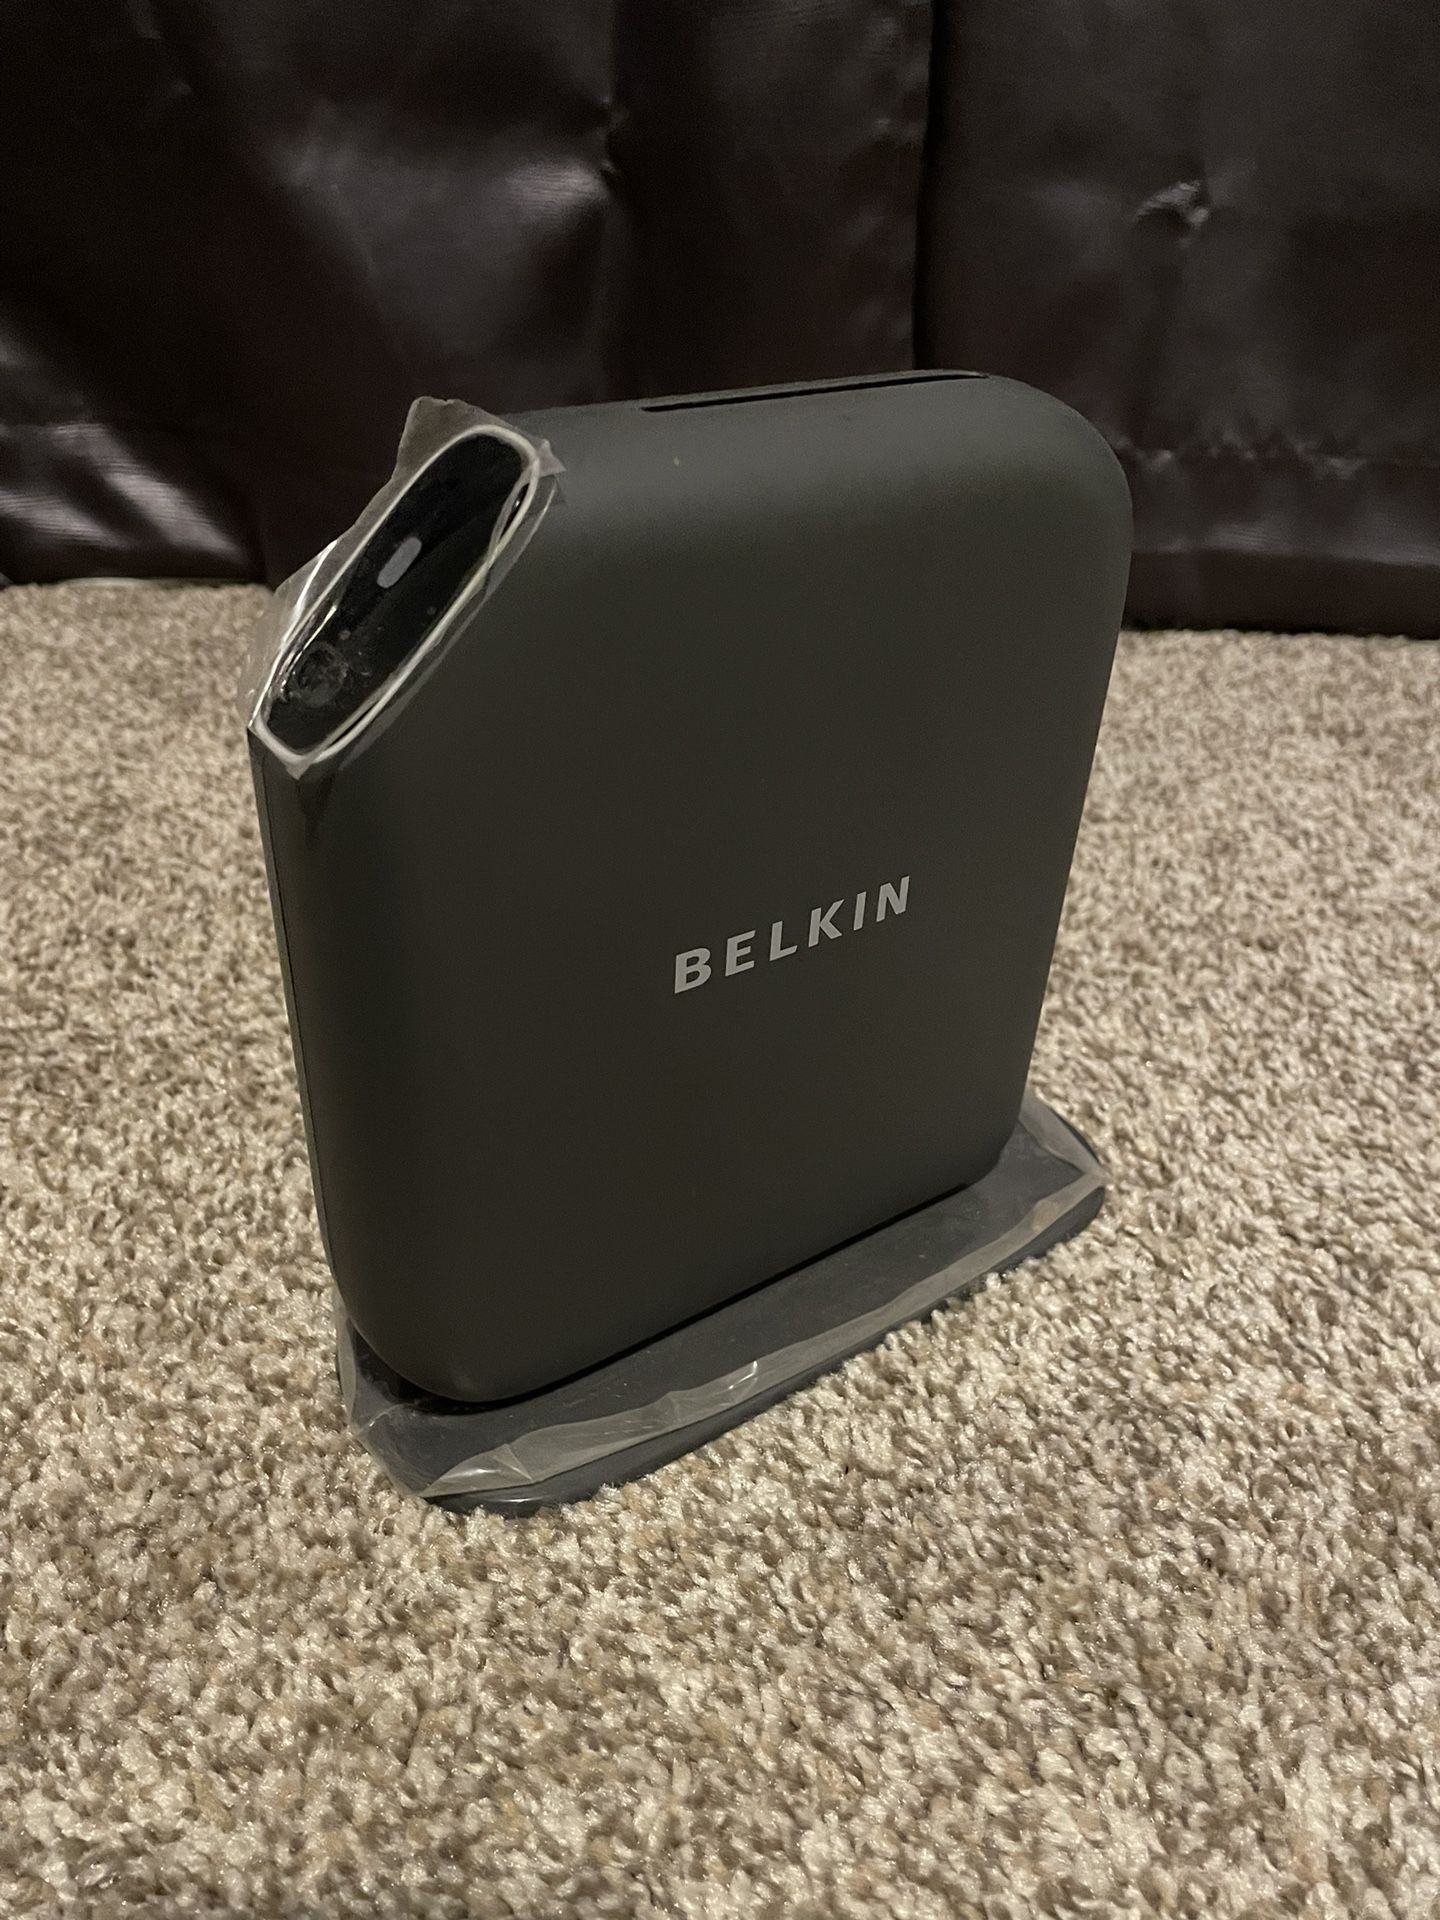 Belkin Play N600 HD Wireless Dual-Band N Router